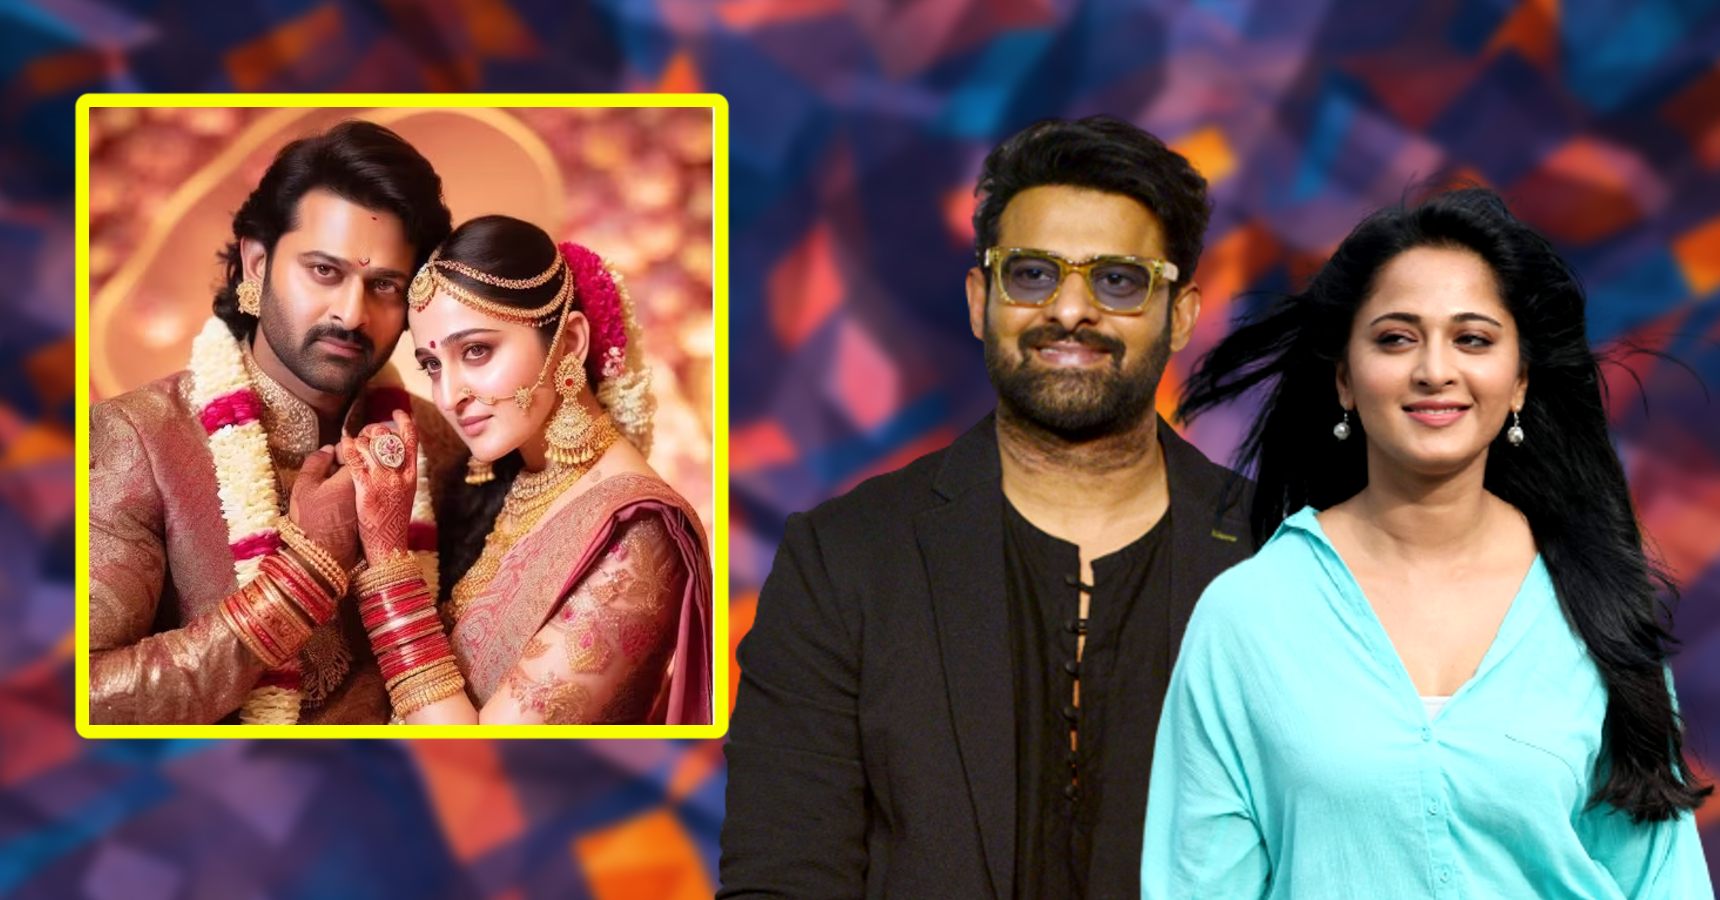 Prabhas and Anushka Shetty marriage album goes viral on social media